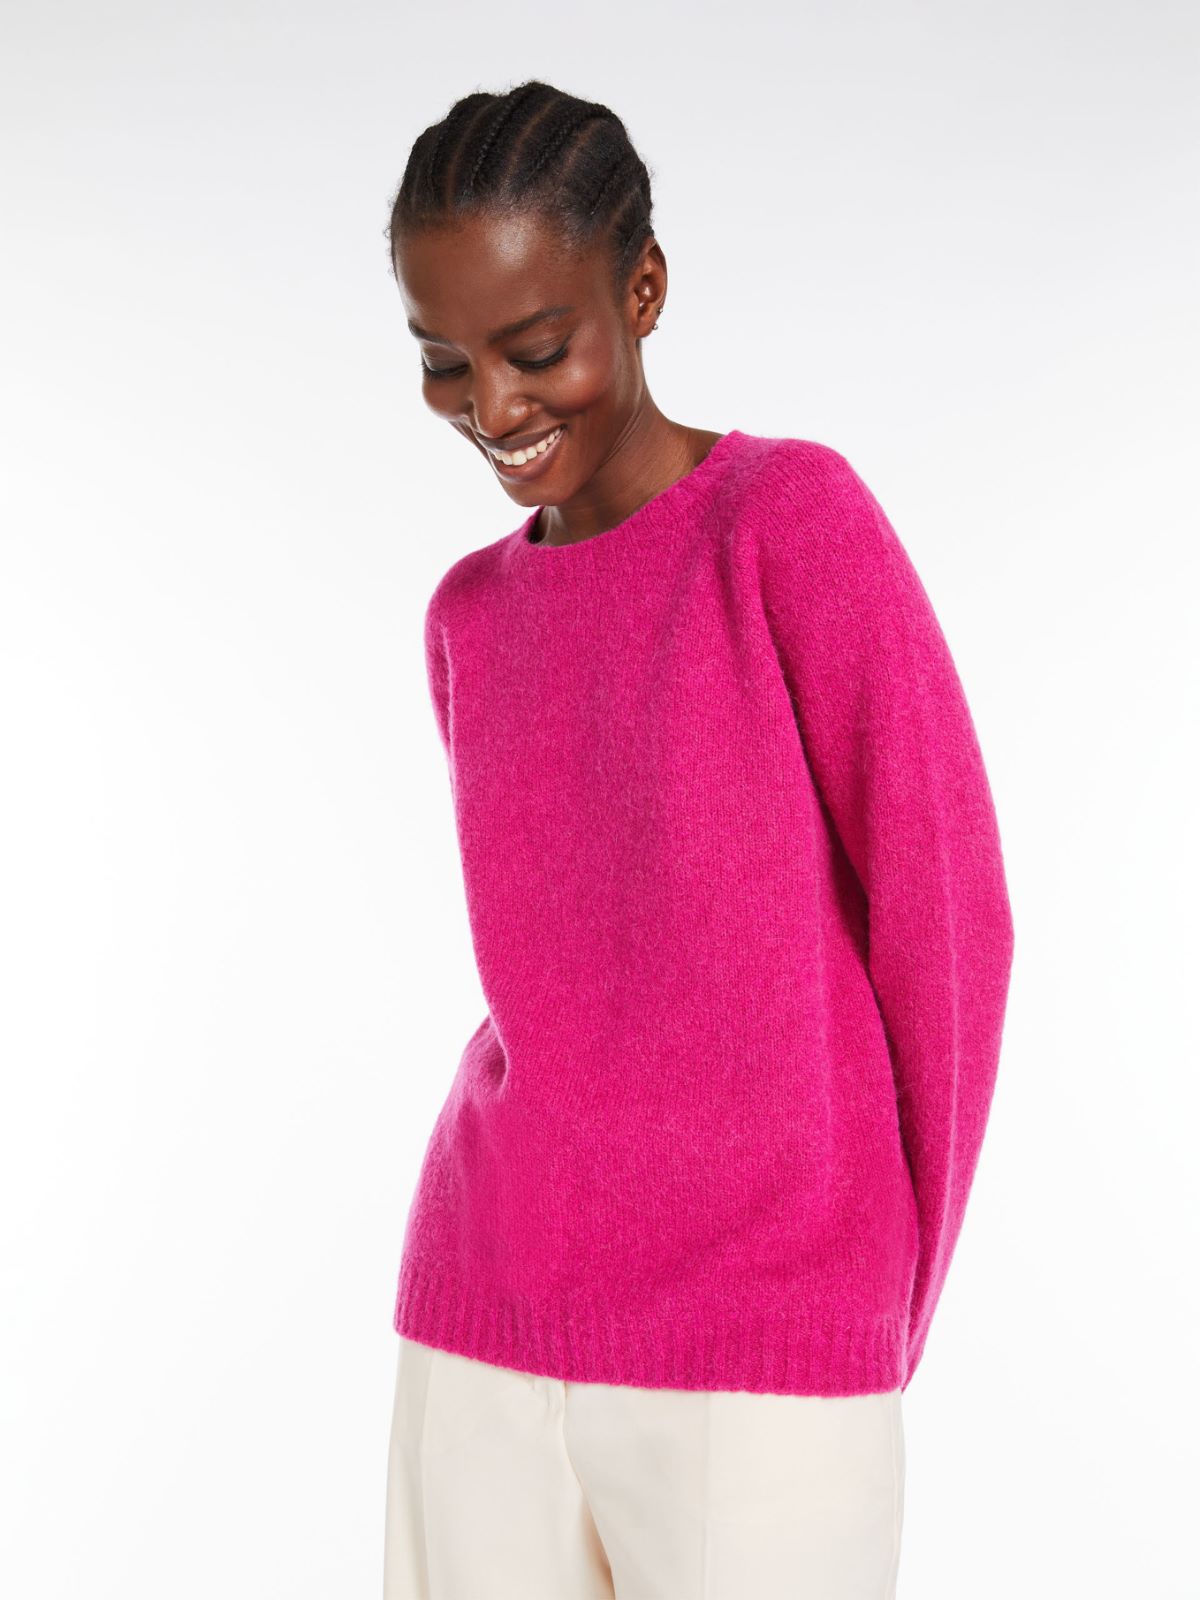 Soft knit top in alpaca and cotton - FUCHSIA - Weekend Max Mara - 4